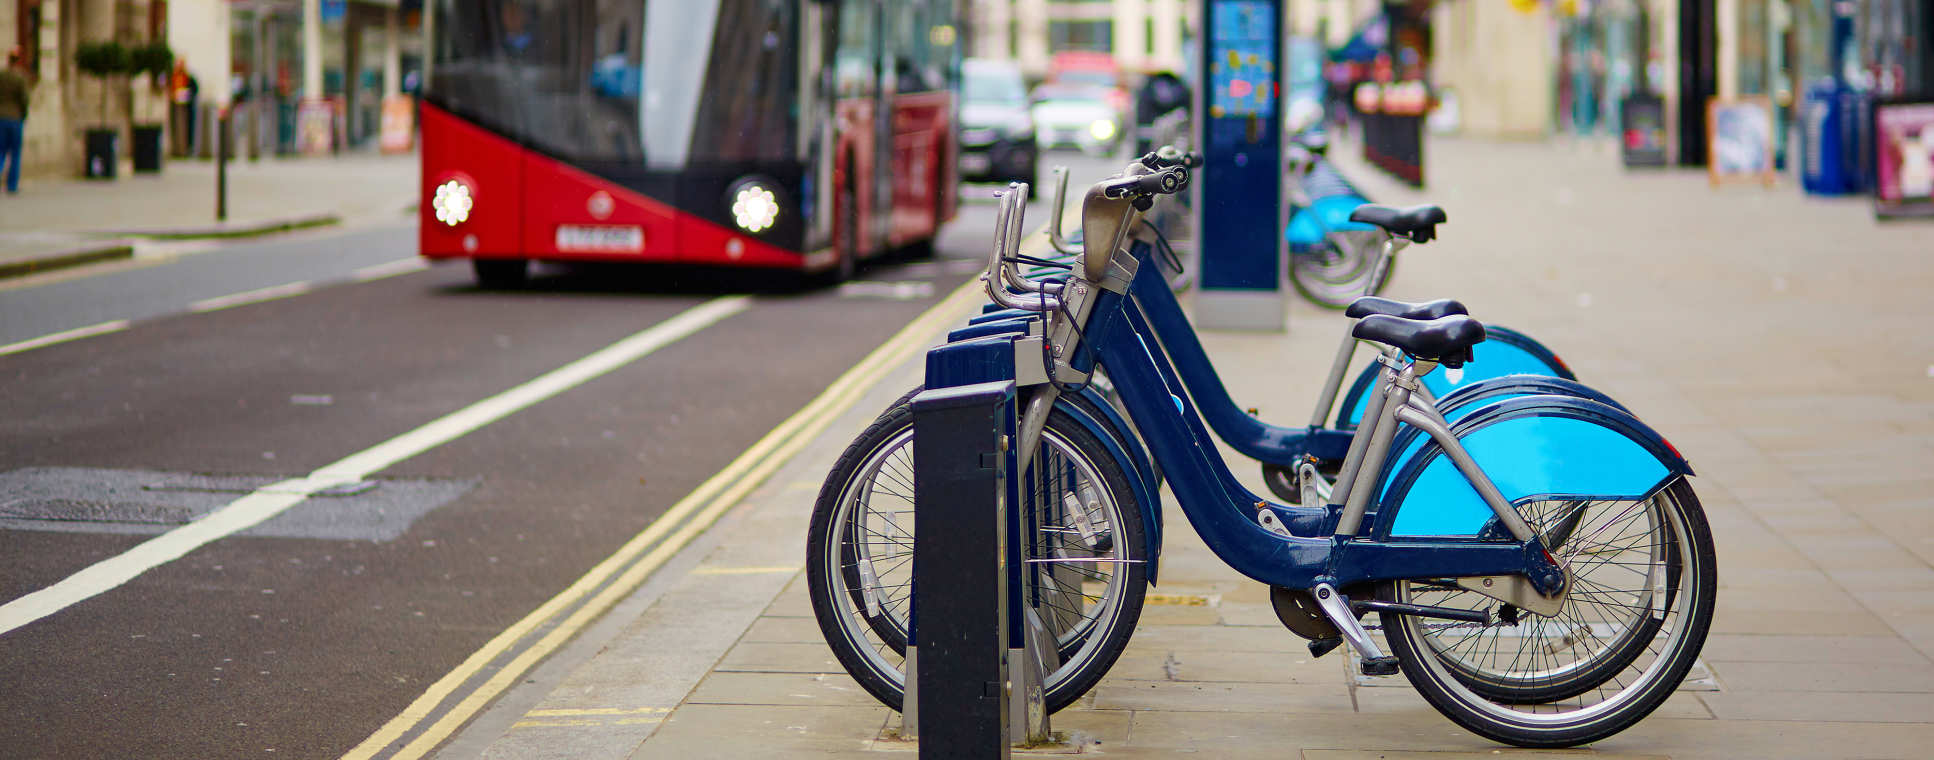 A row of public bikes in London